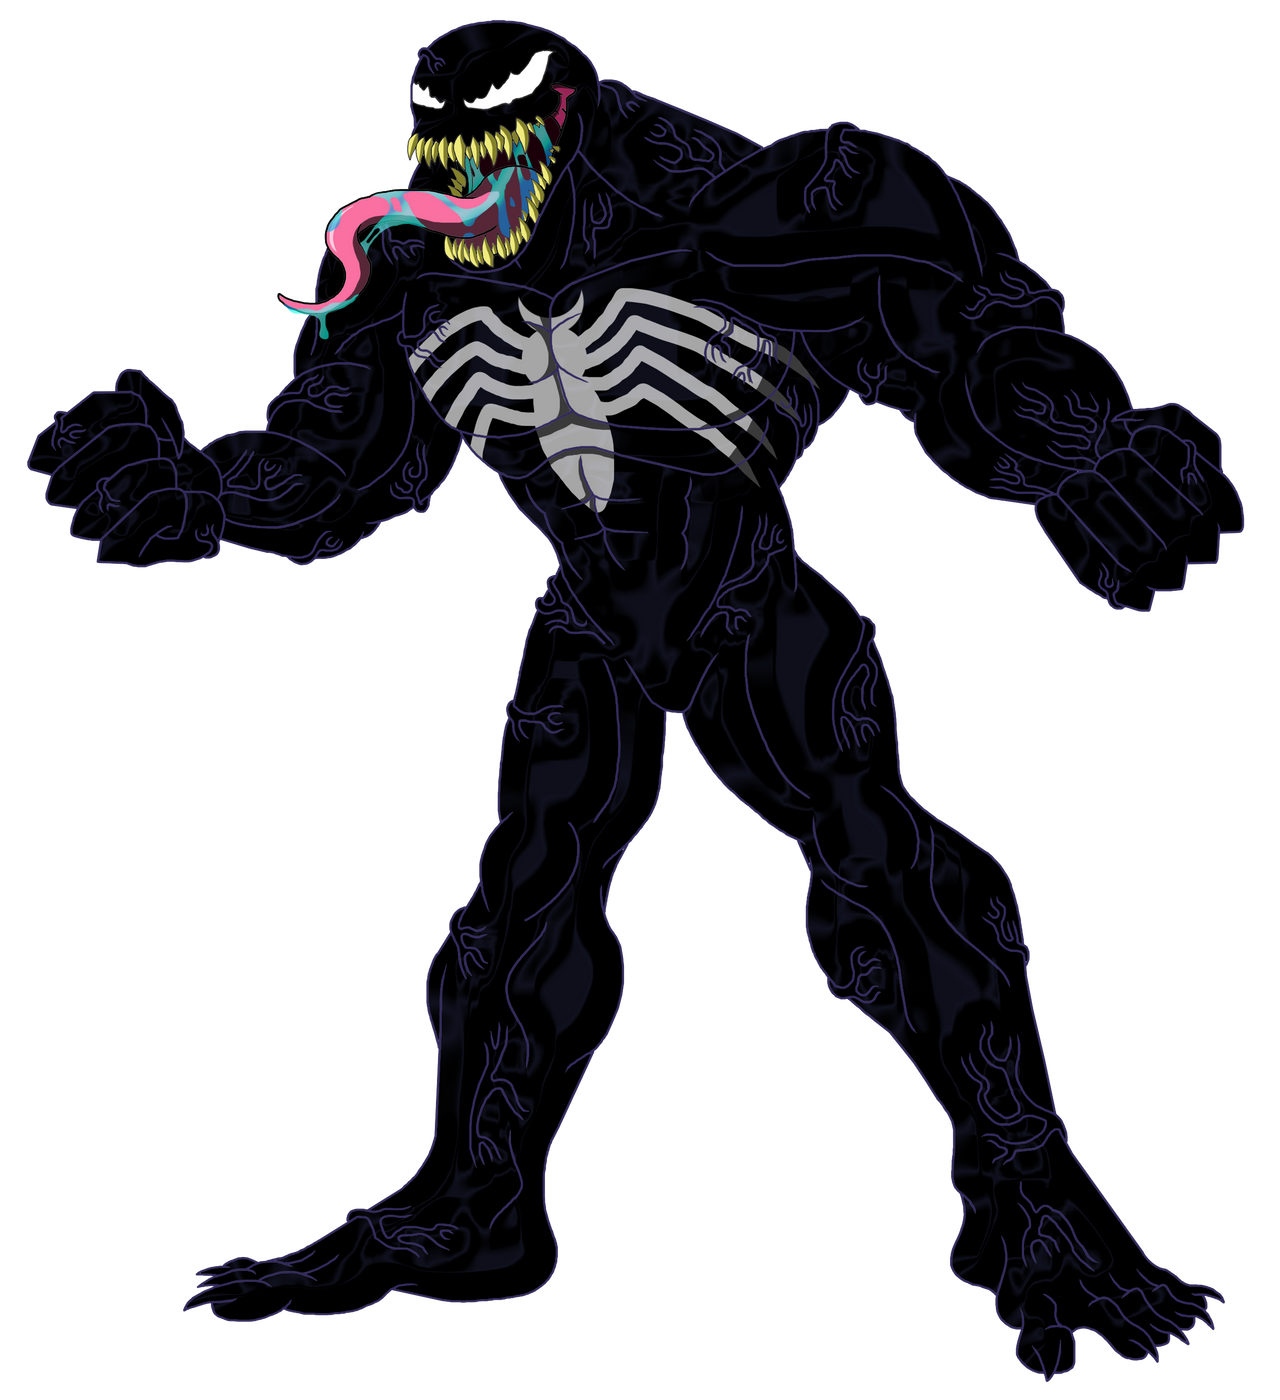 Oh, Venom by TheAquabot on DeviantArt